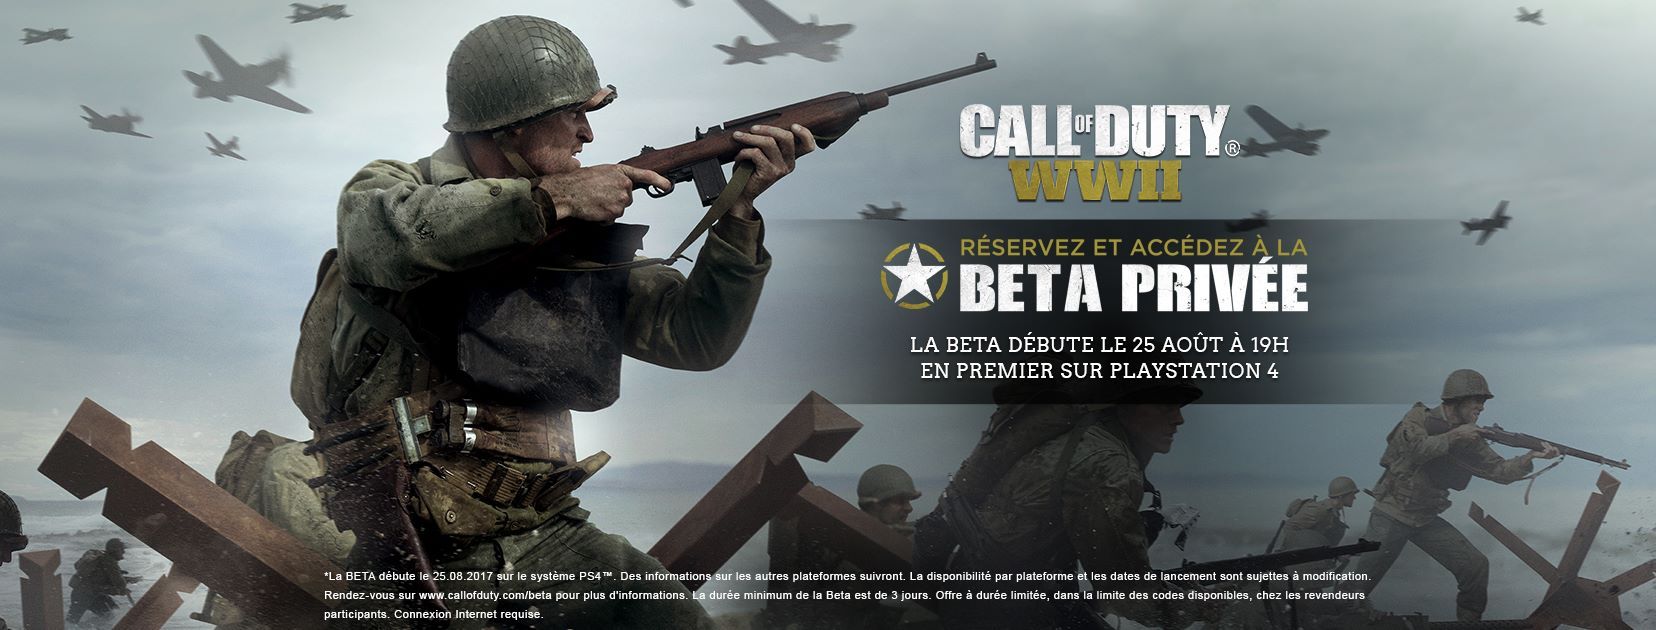 Illustration de l'article sur Call of Duty WWII  J-3 avant la BETA PS4